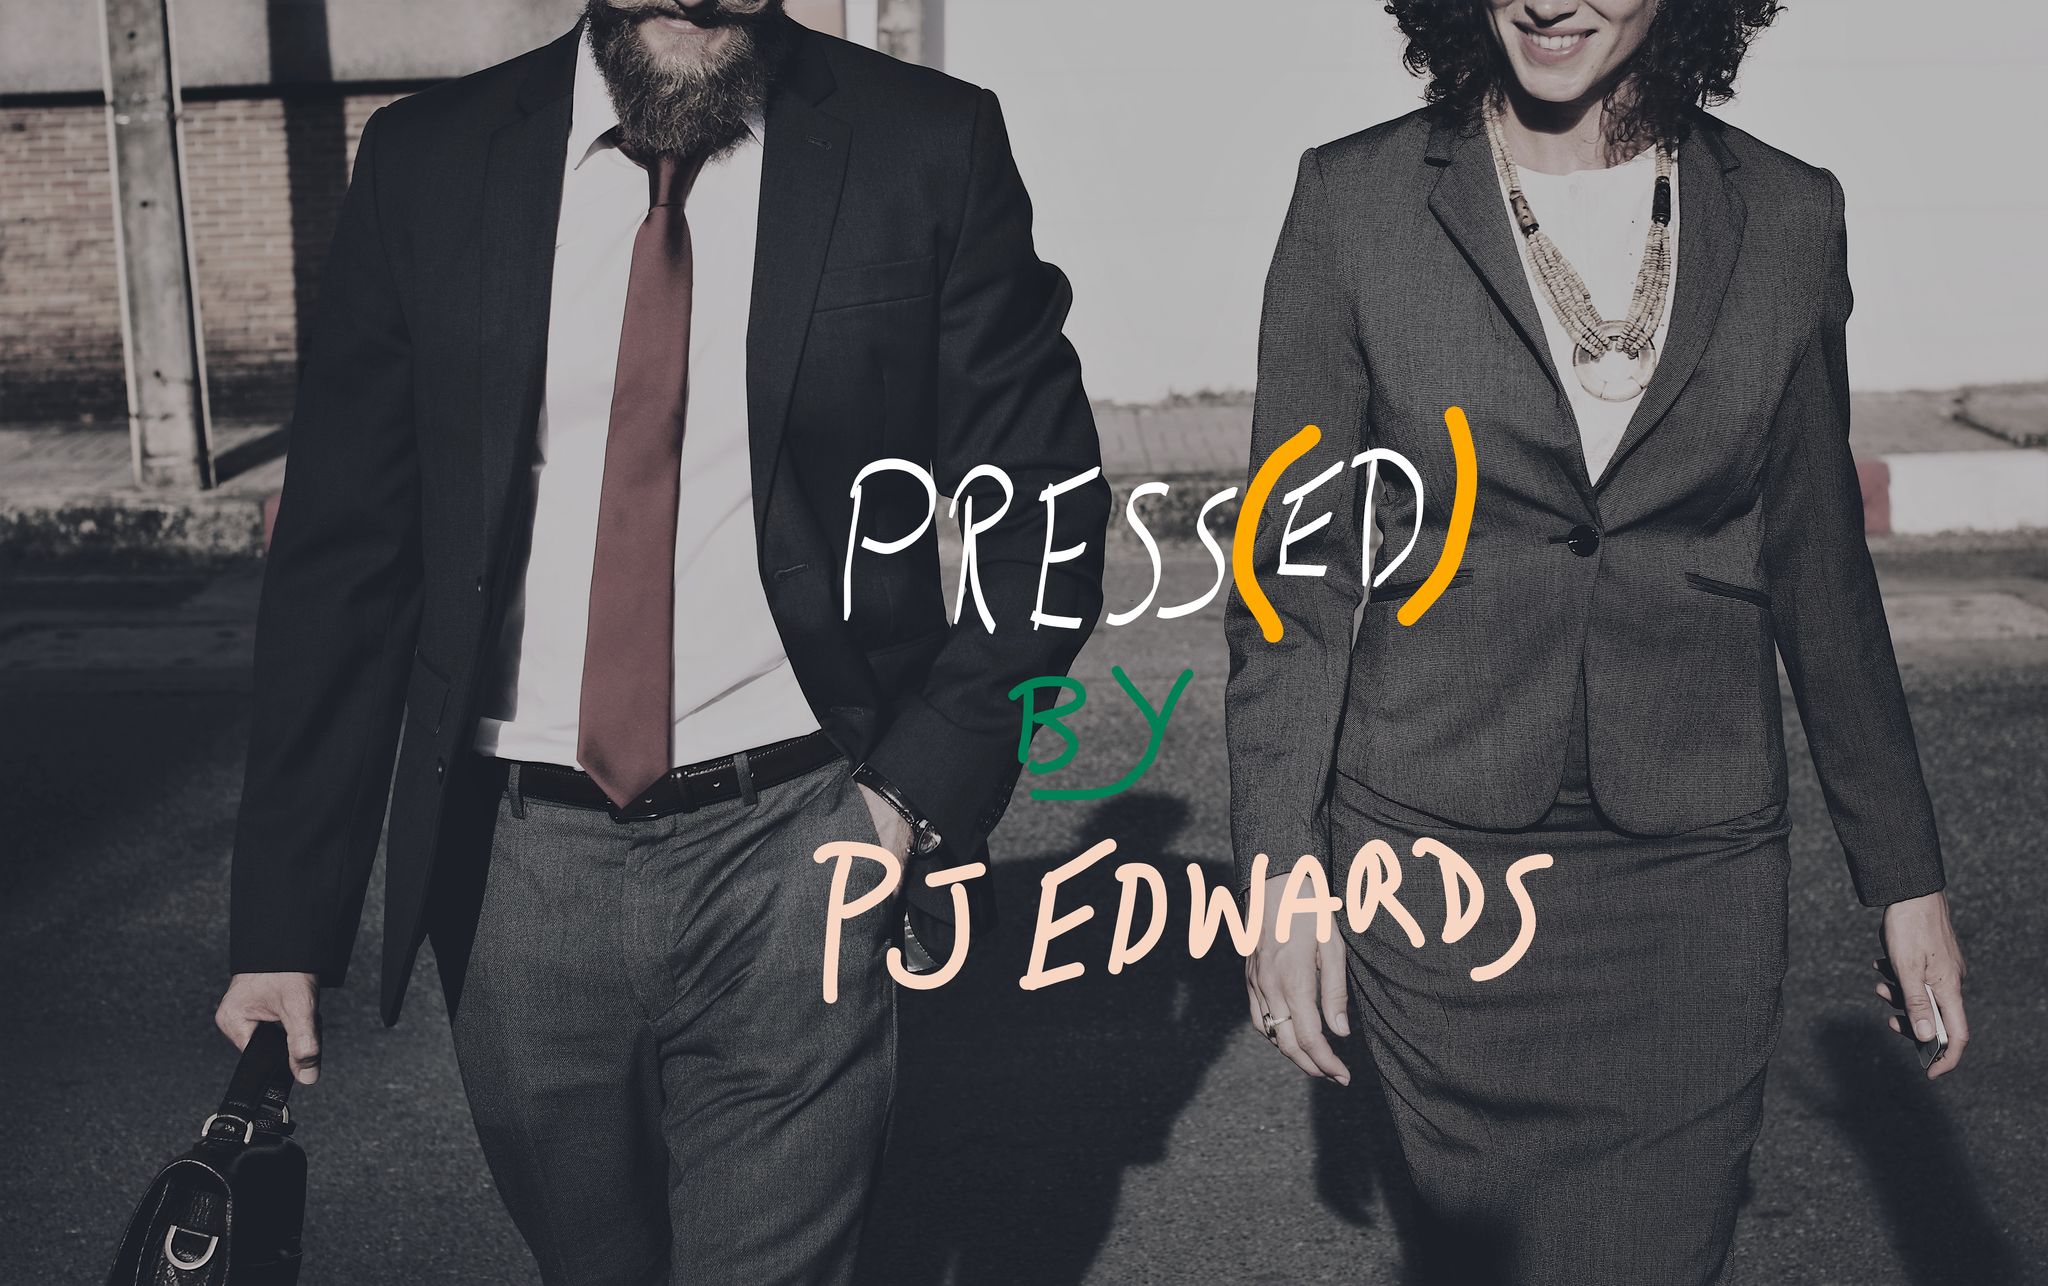 PRESS(ED)